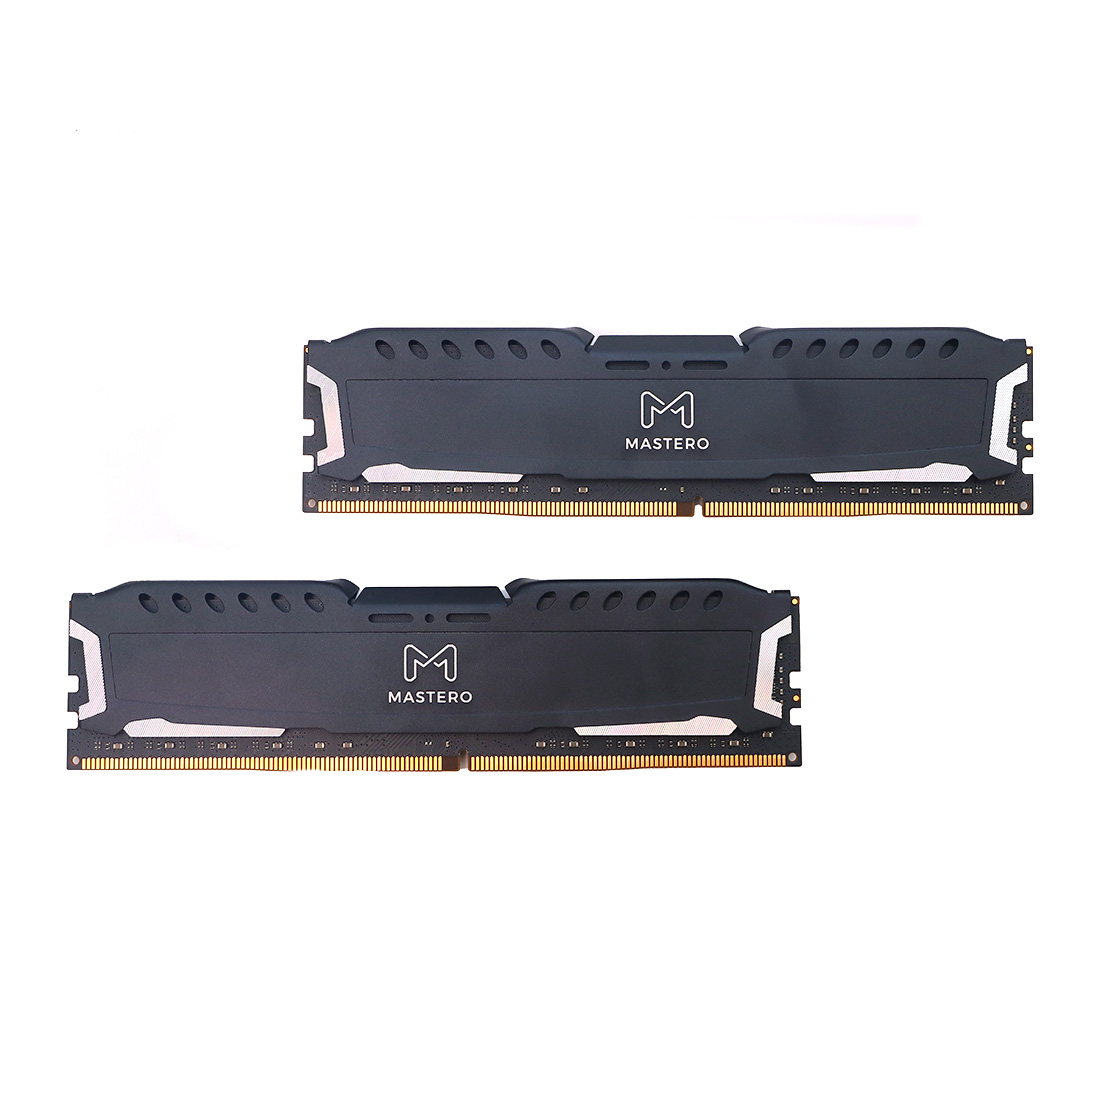 Комплект памяти DDR4 DIMM 32Gb (2x16Gb), 3200MHz, CL16, 1.35V, Mastero (MS-OP-32G-3200-CL16-K2) Retail